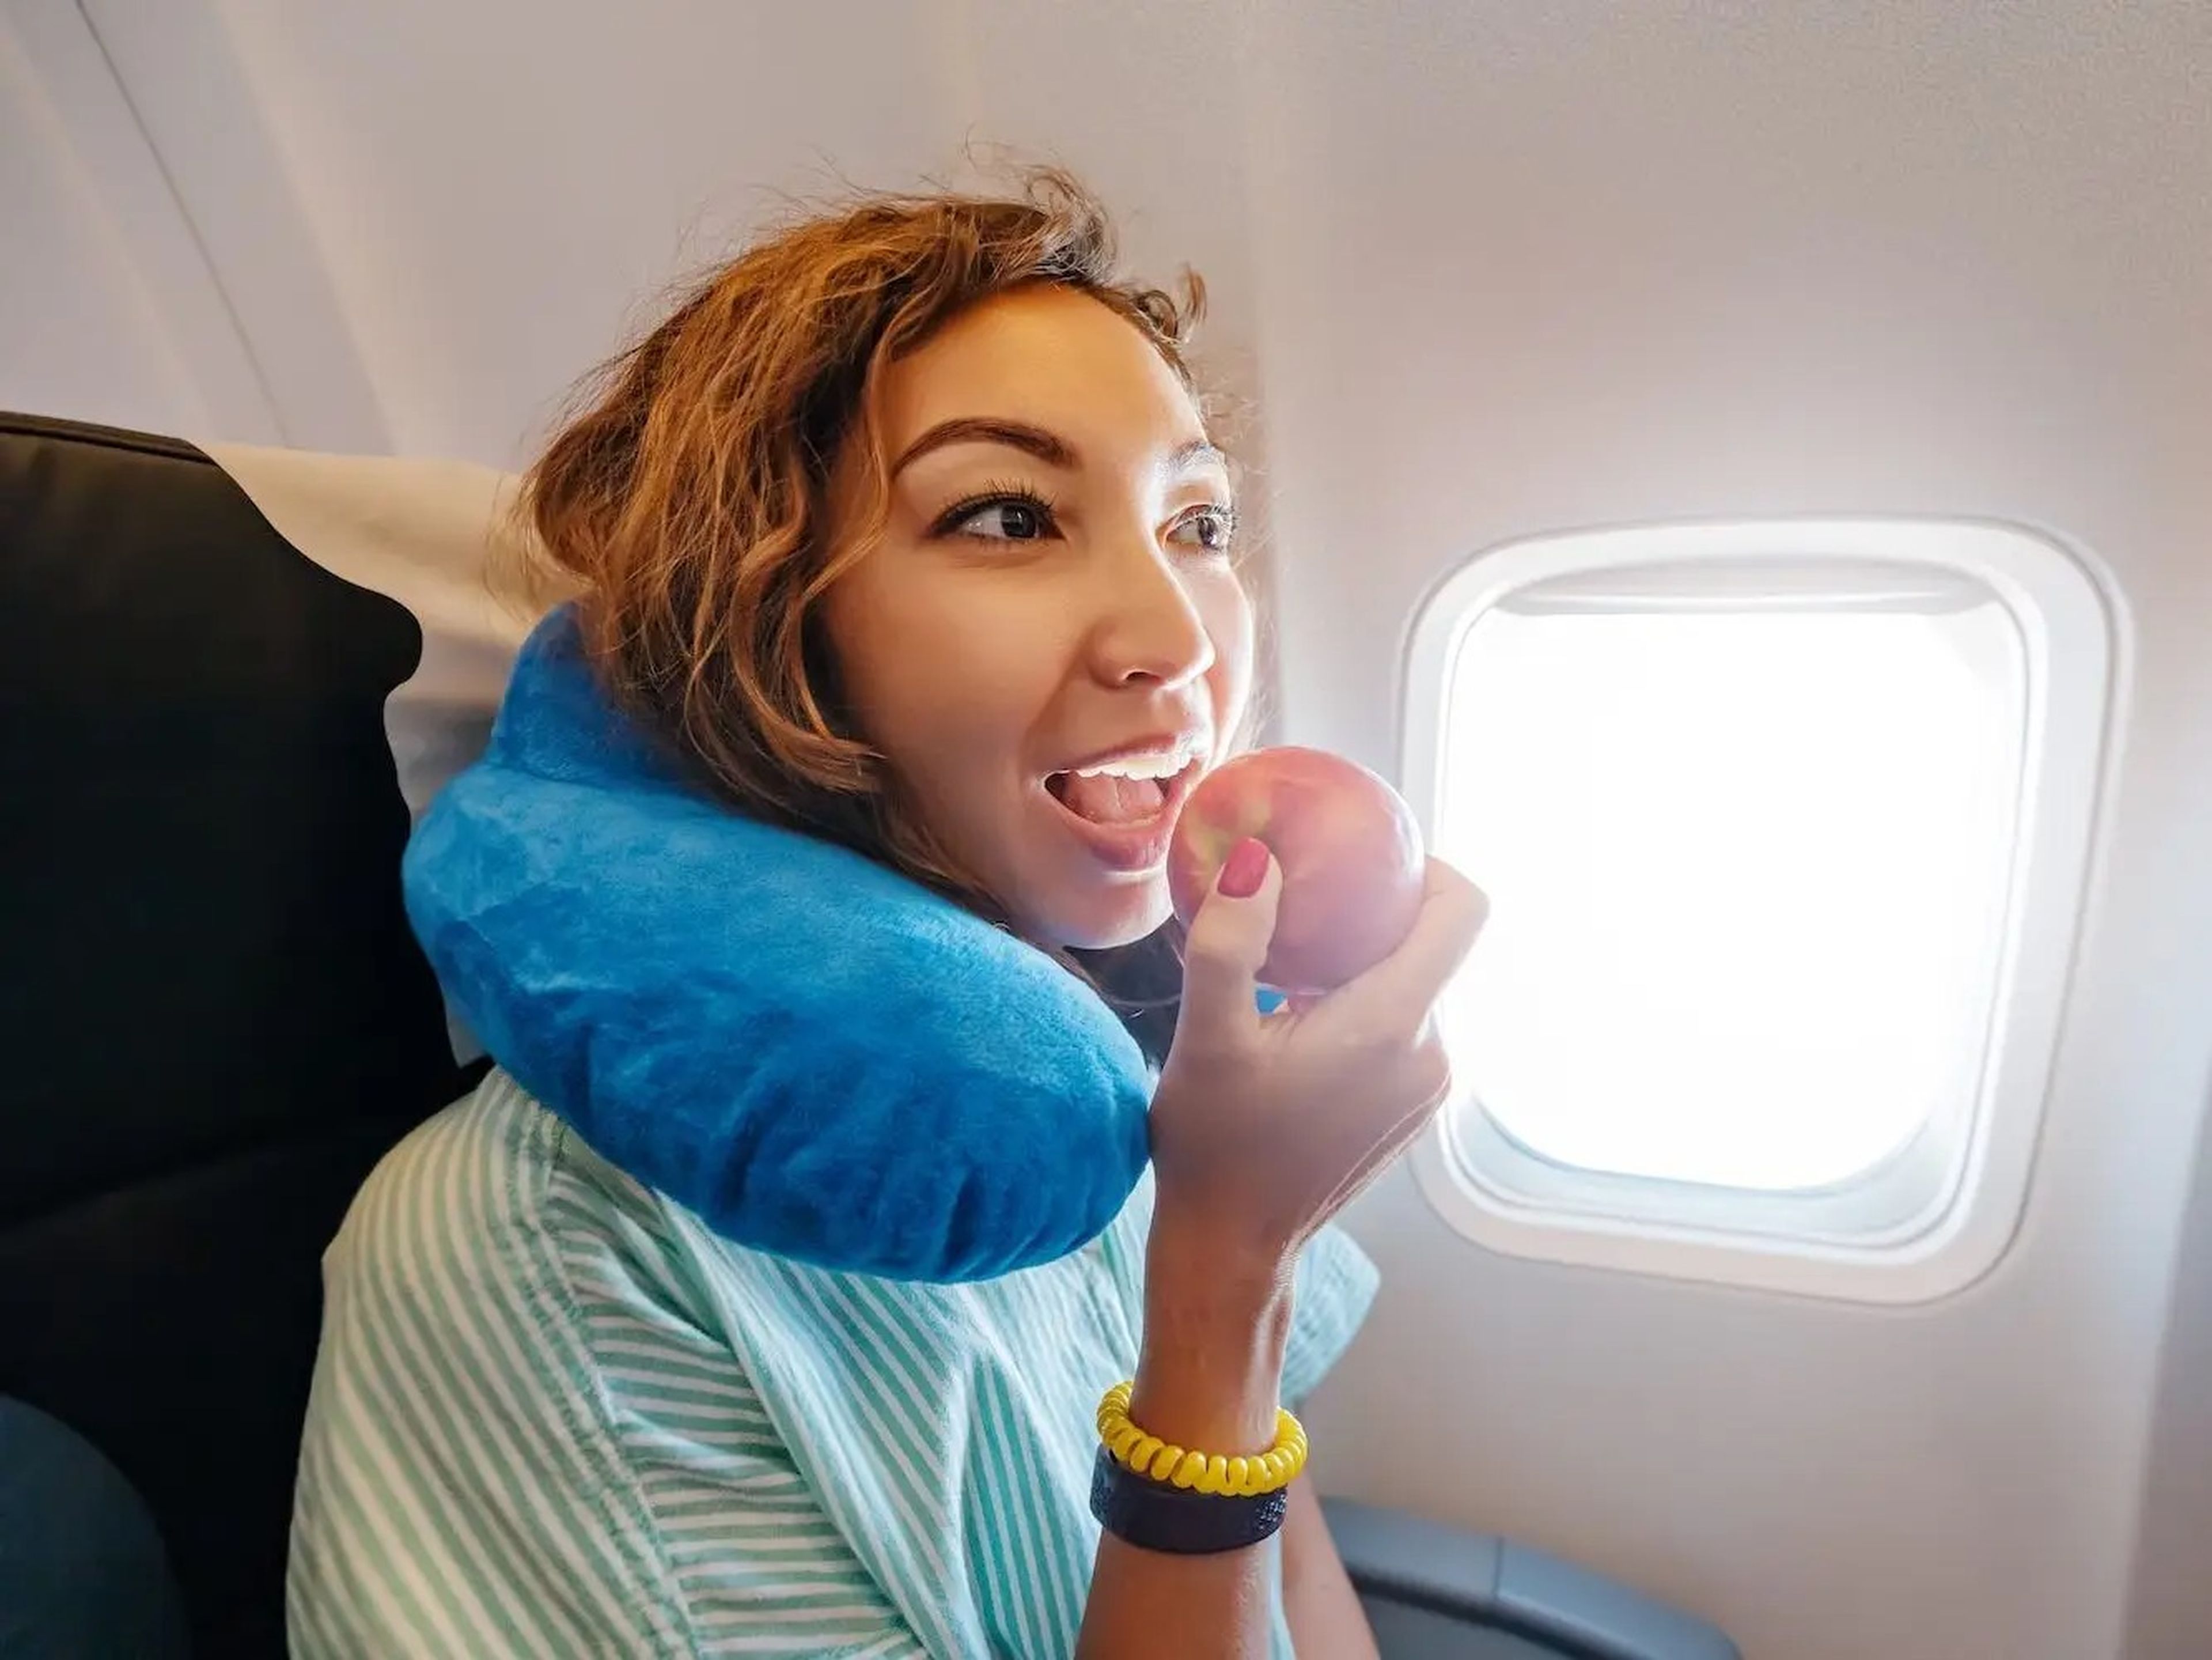 A woman eats an apple on an airplane.